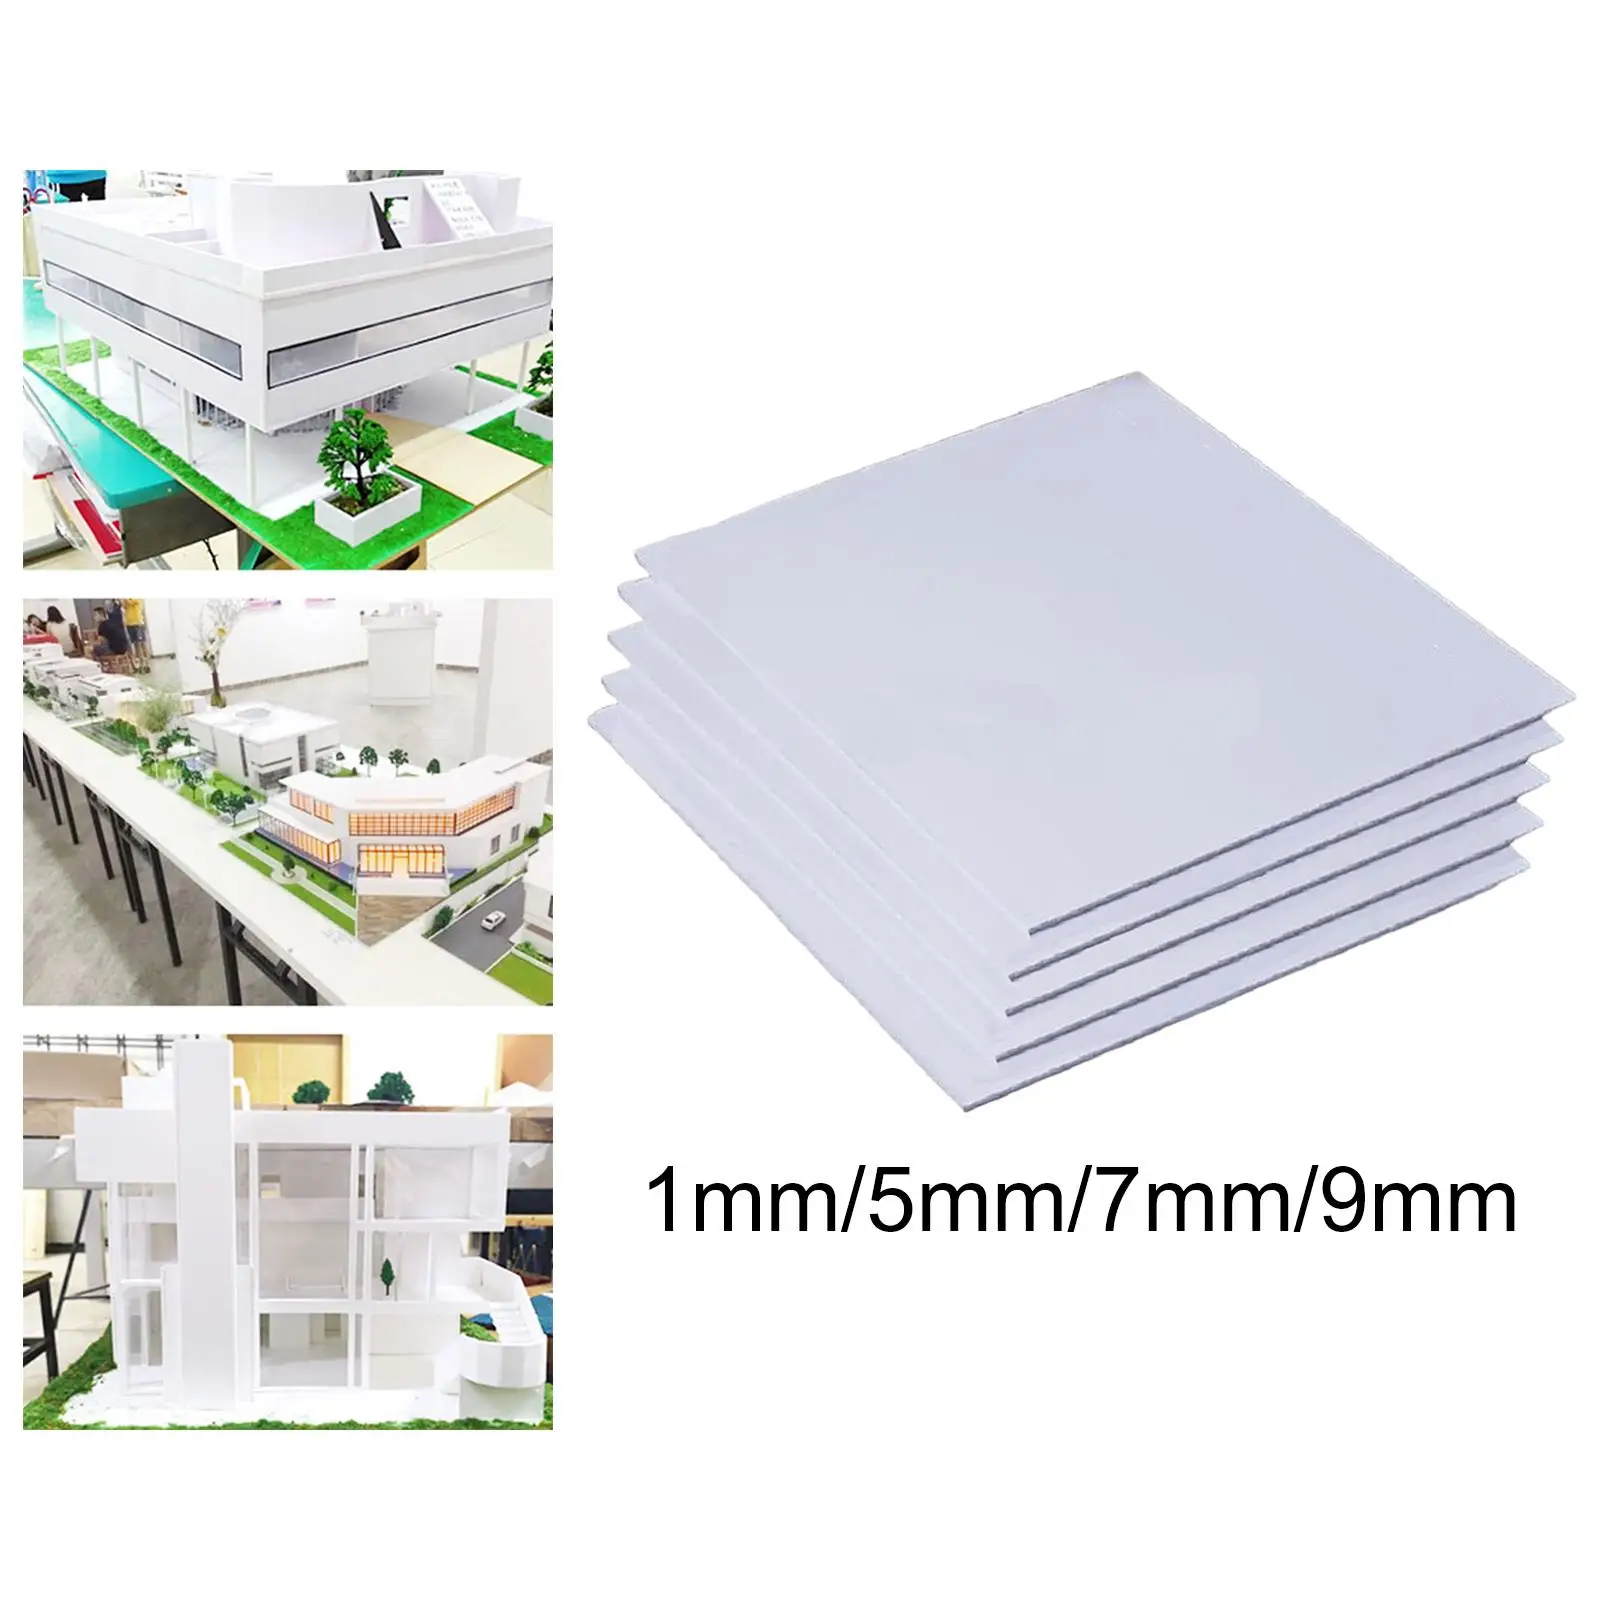 5x White Board Foam Sheets DIY Landscape Scenery Building Card Making Art Display Mountains Landscape Foam Plate Diorama Base